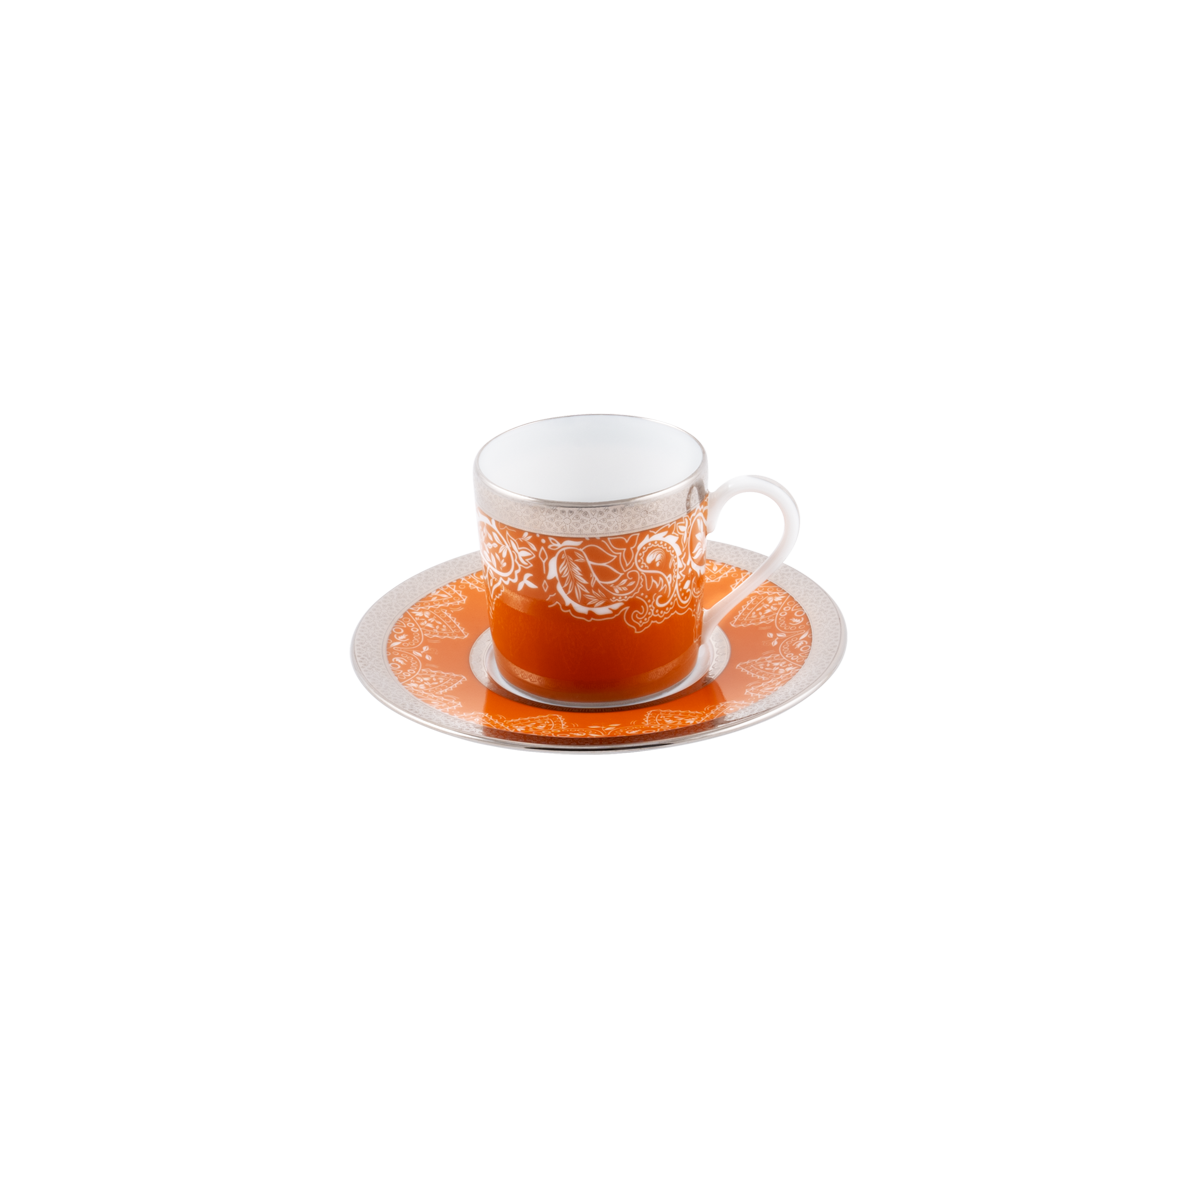 Set of 4 Coffee Cups and Saucers - Romane Orange